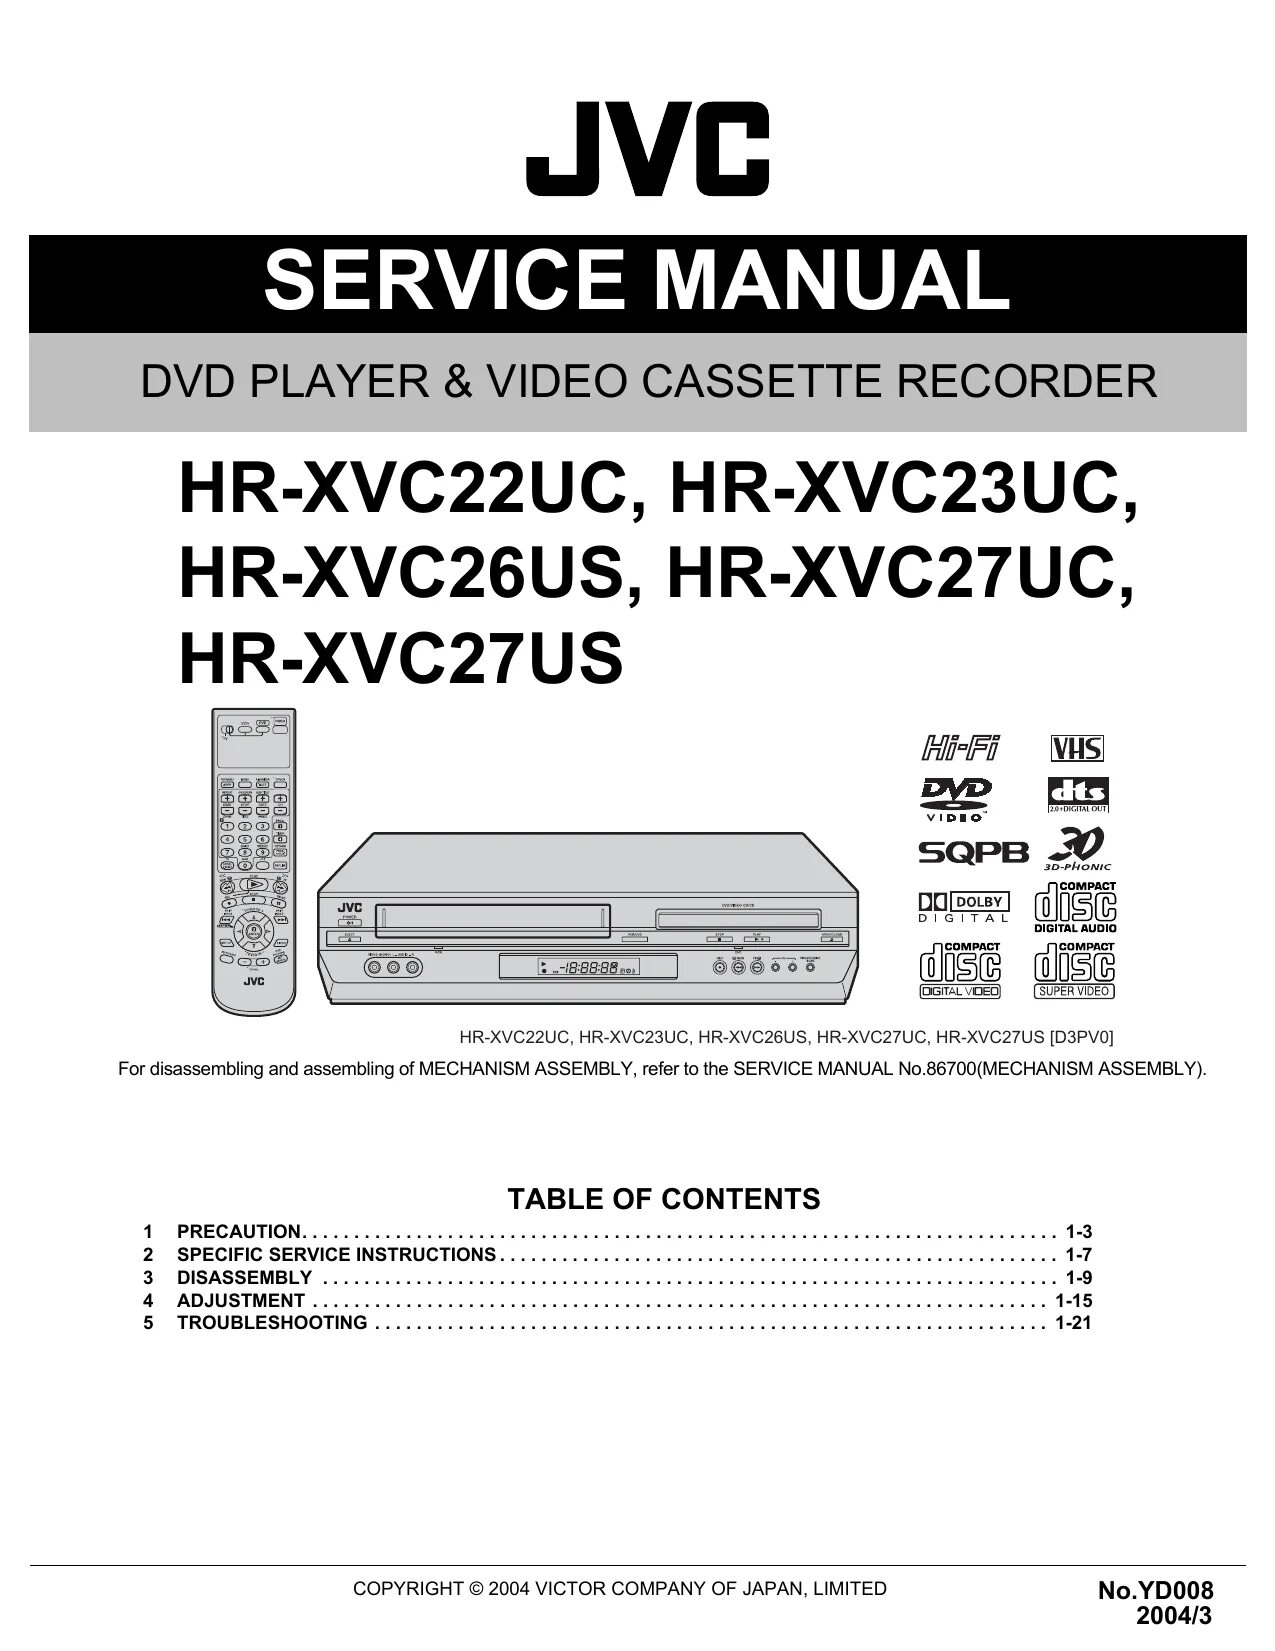 Service manual jvc. JVC XV-E 100sl. JVC ag404 manual. JVC HR-j52ms manual. JVC HR D 150.